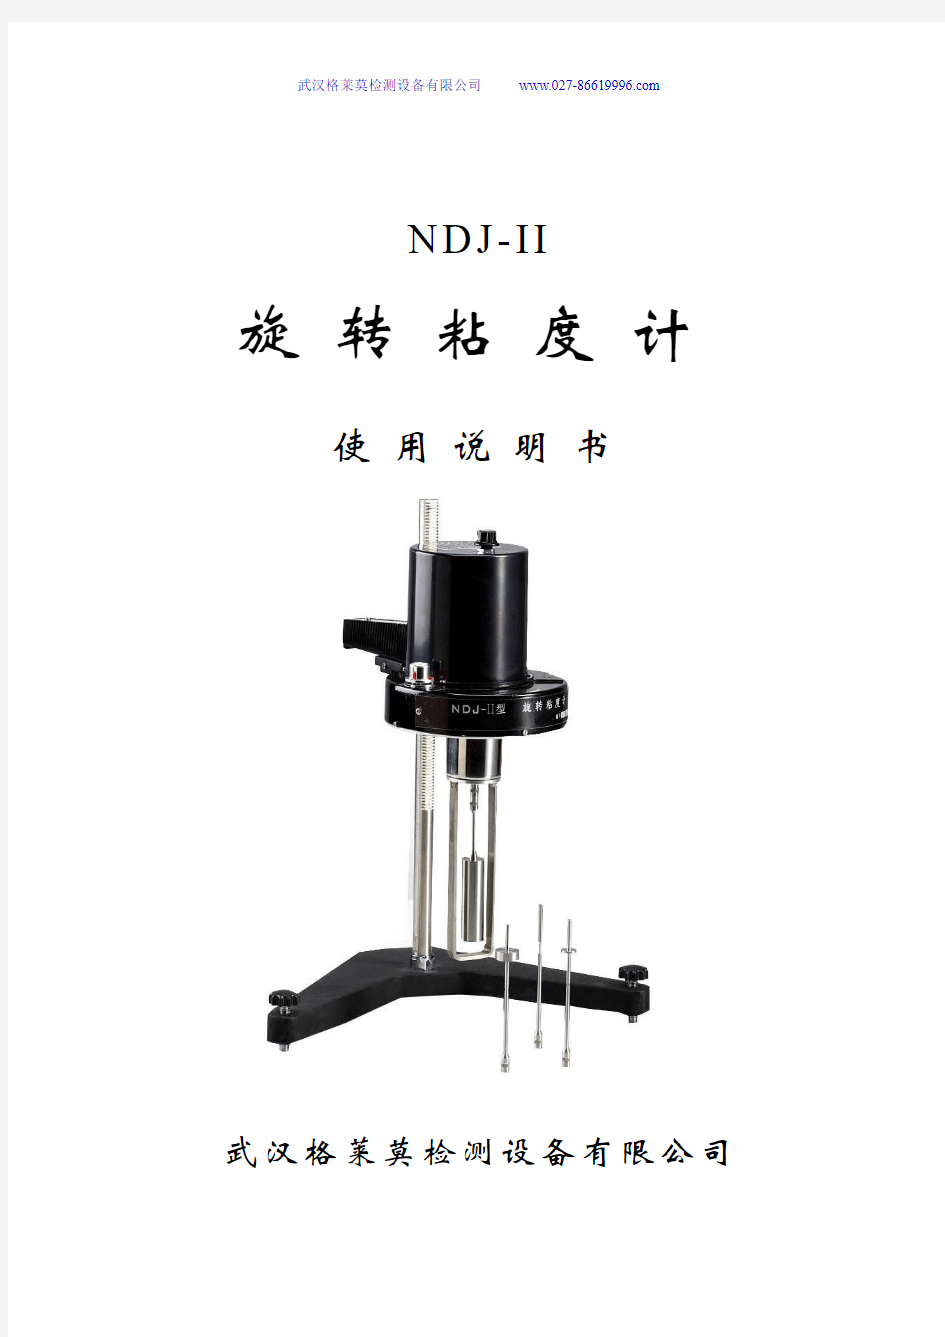 NDJ-II 旋转粘度计